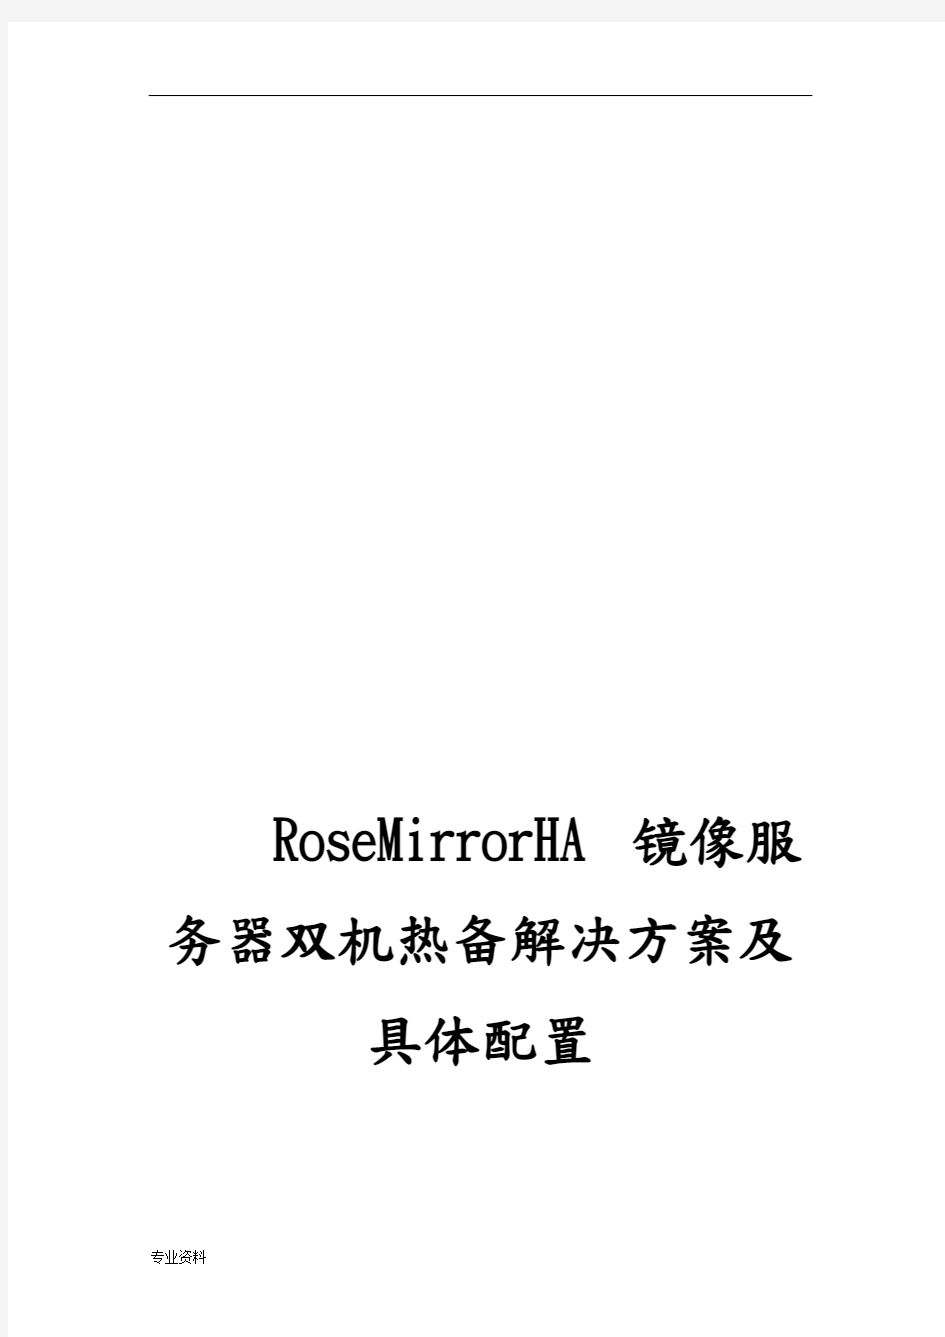 RoseMirrorHA镜像服务器双机热备解决方案具体配置